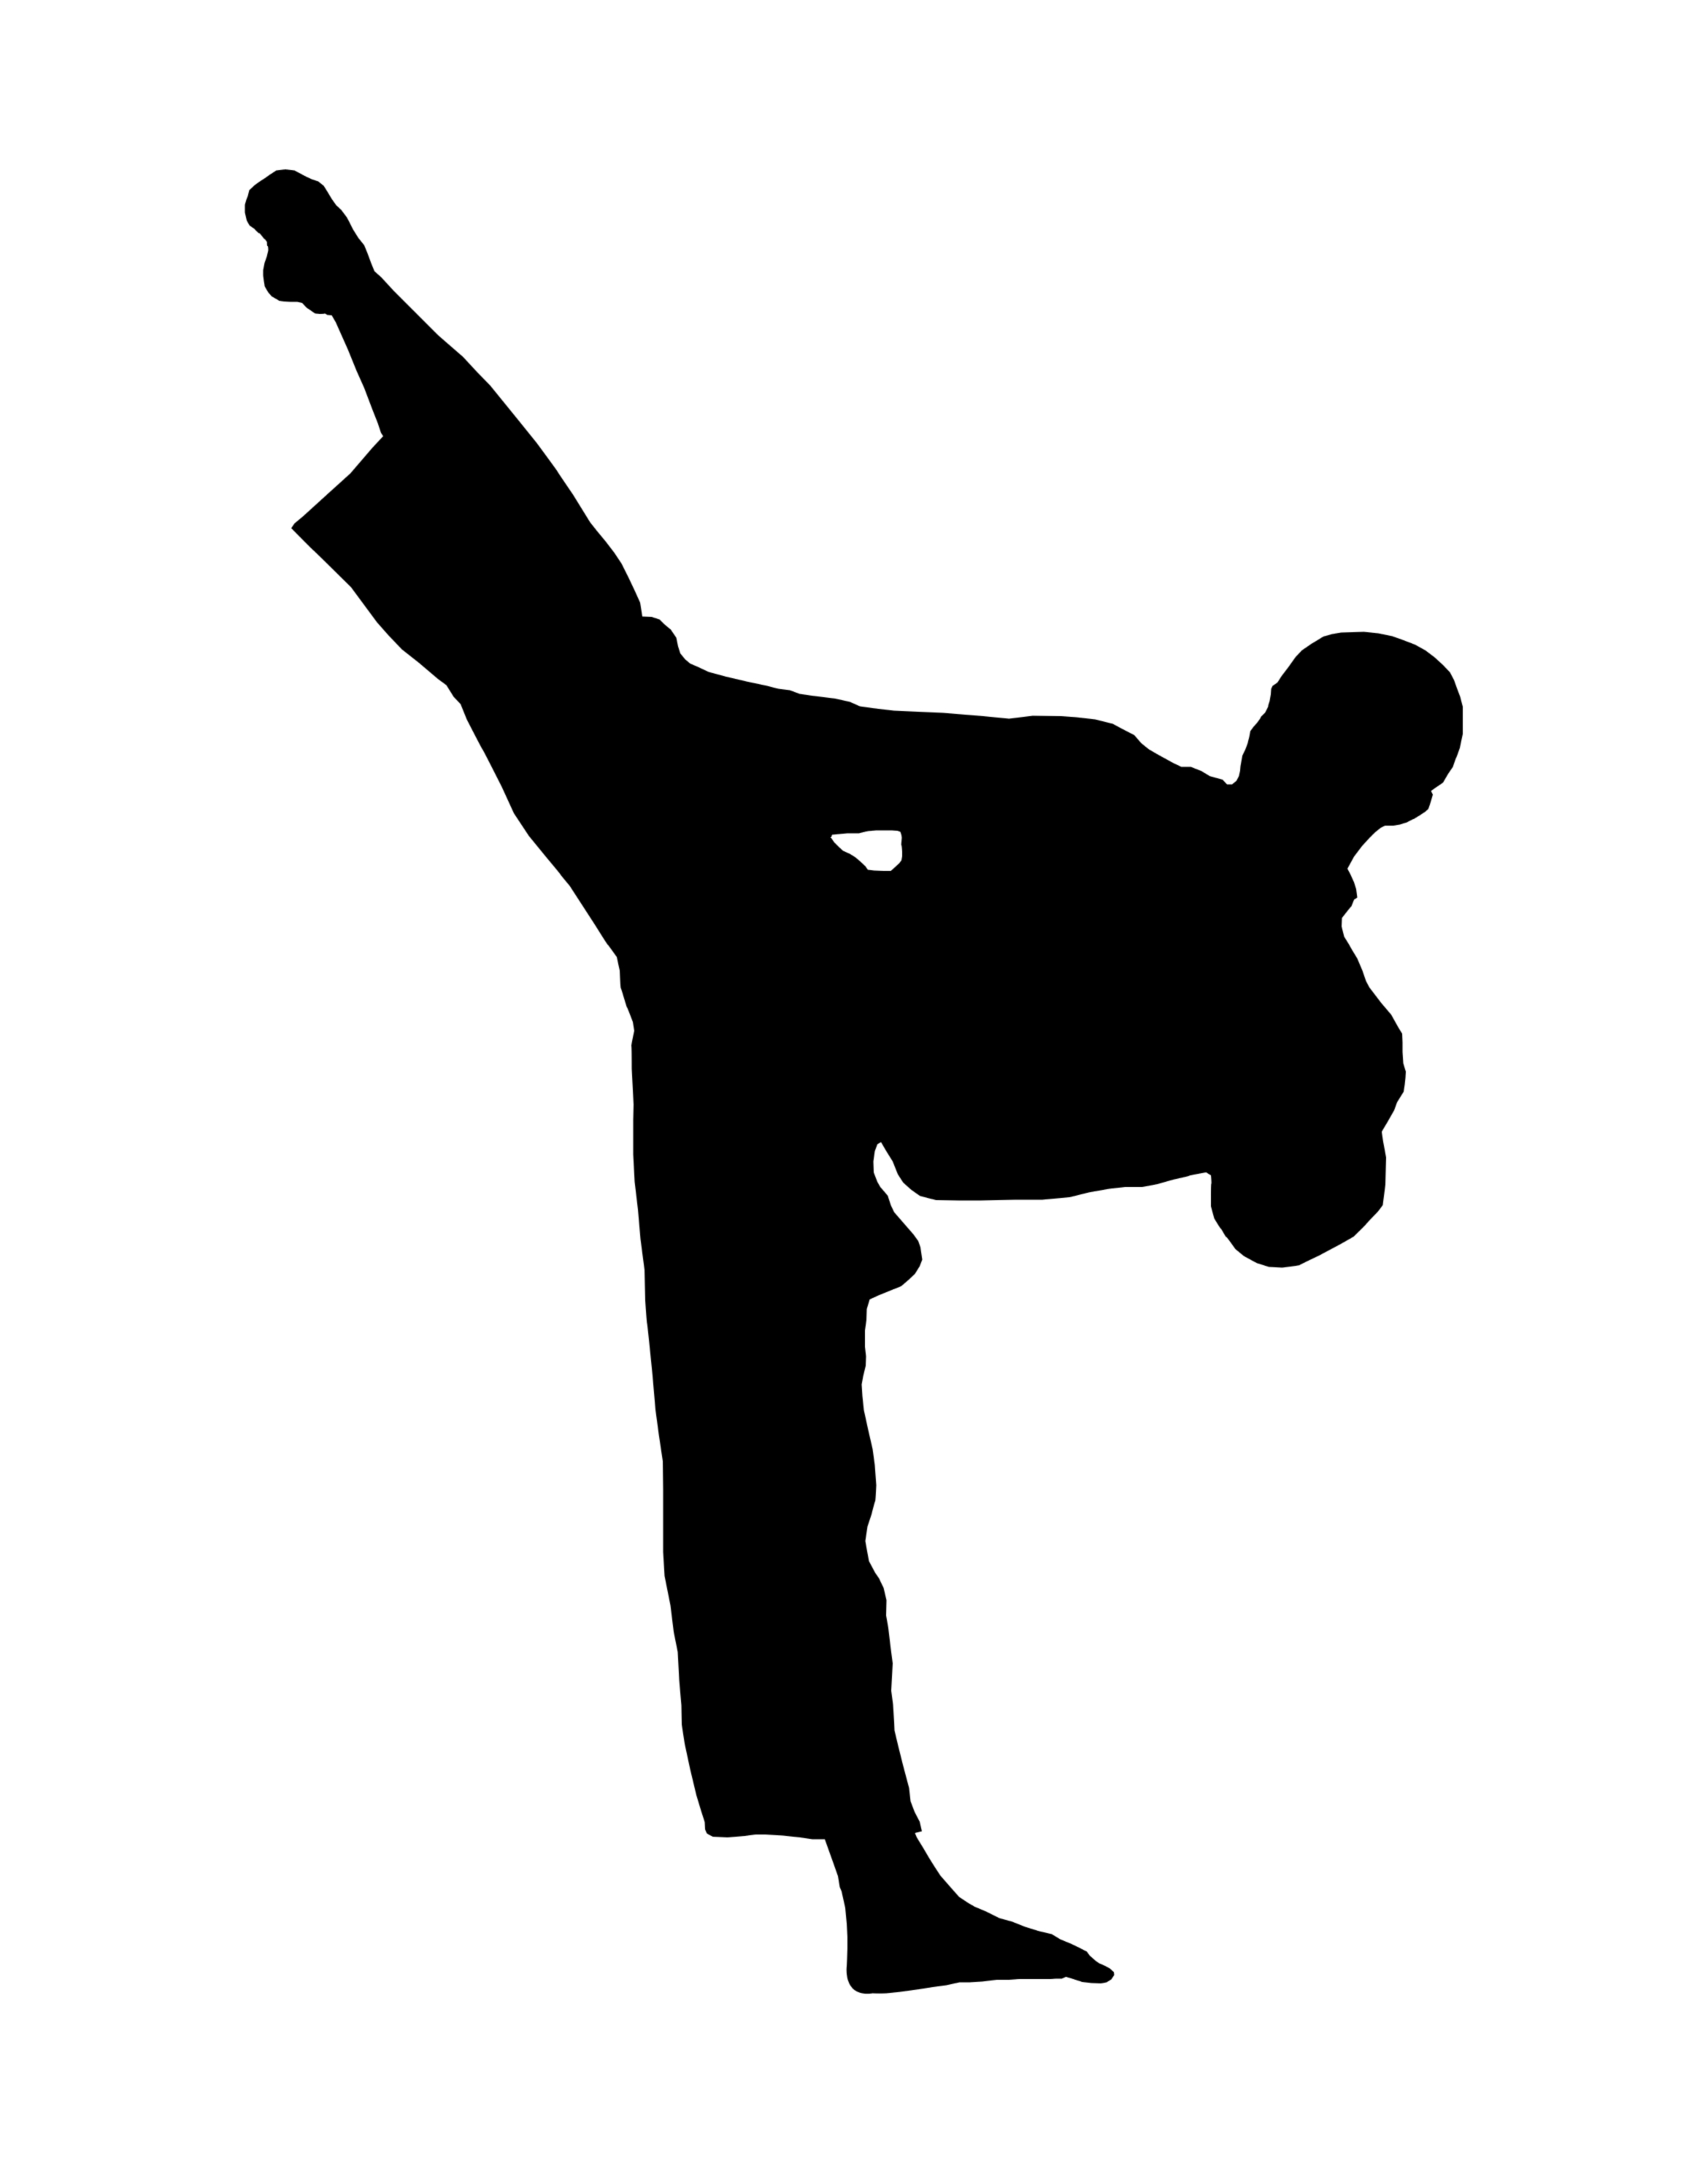 Karate kick clipart